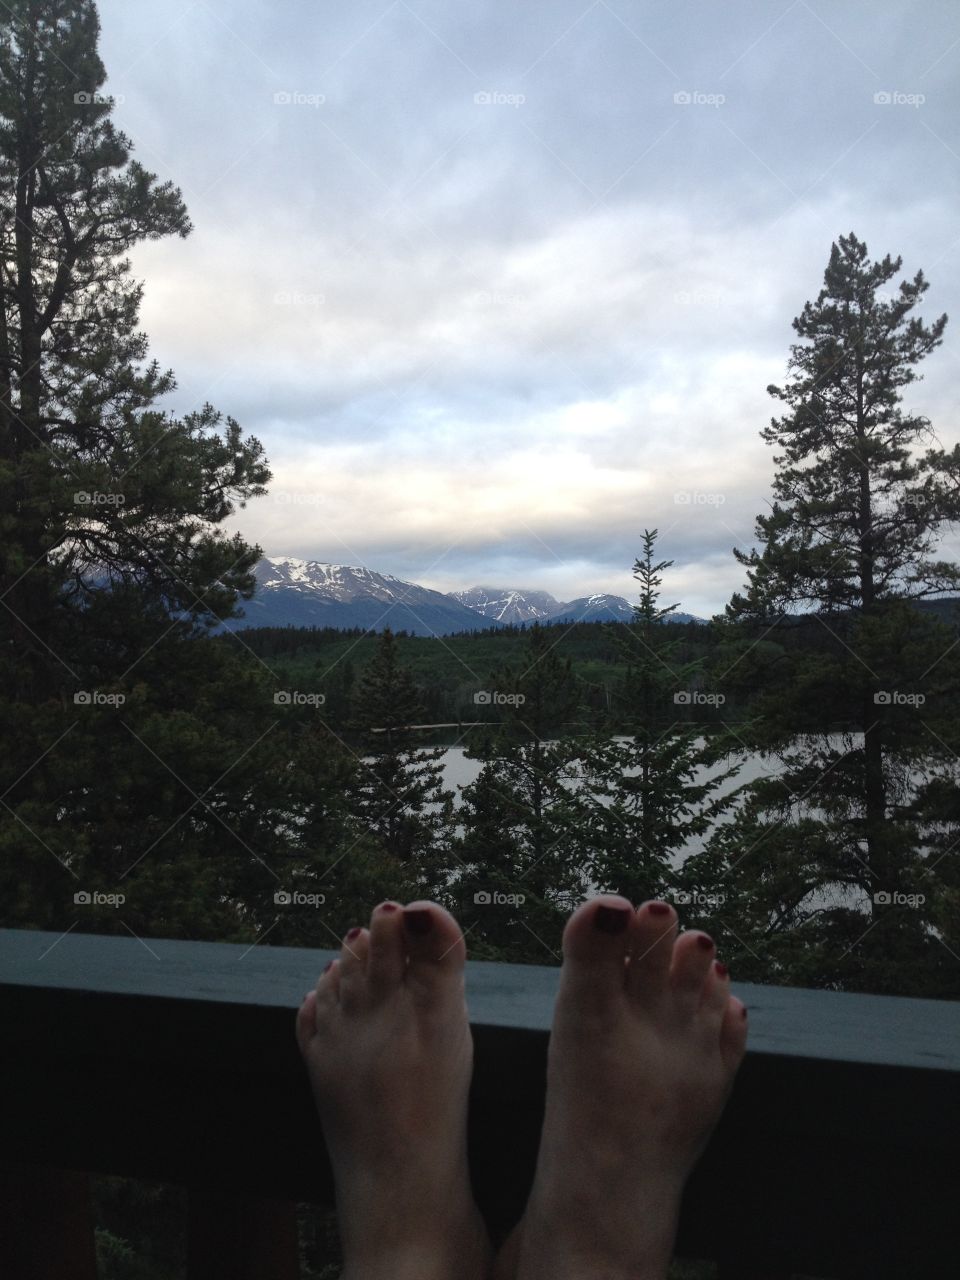 Feet up enjoying the mountains 